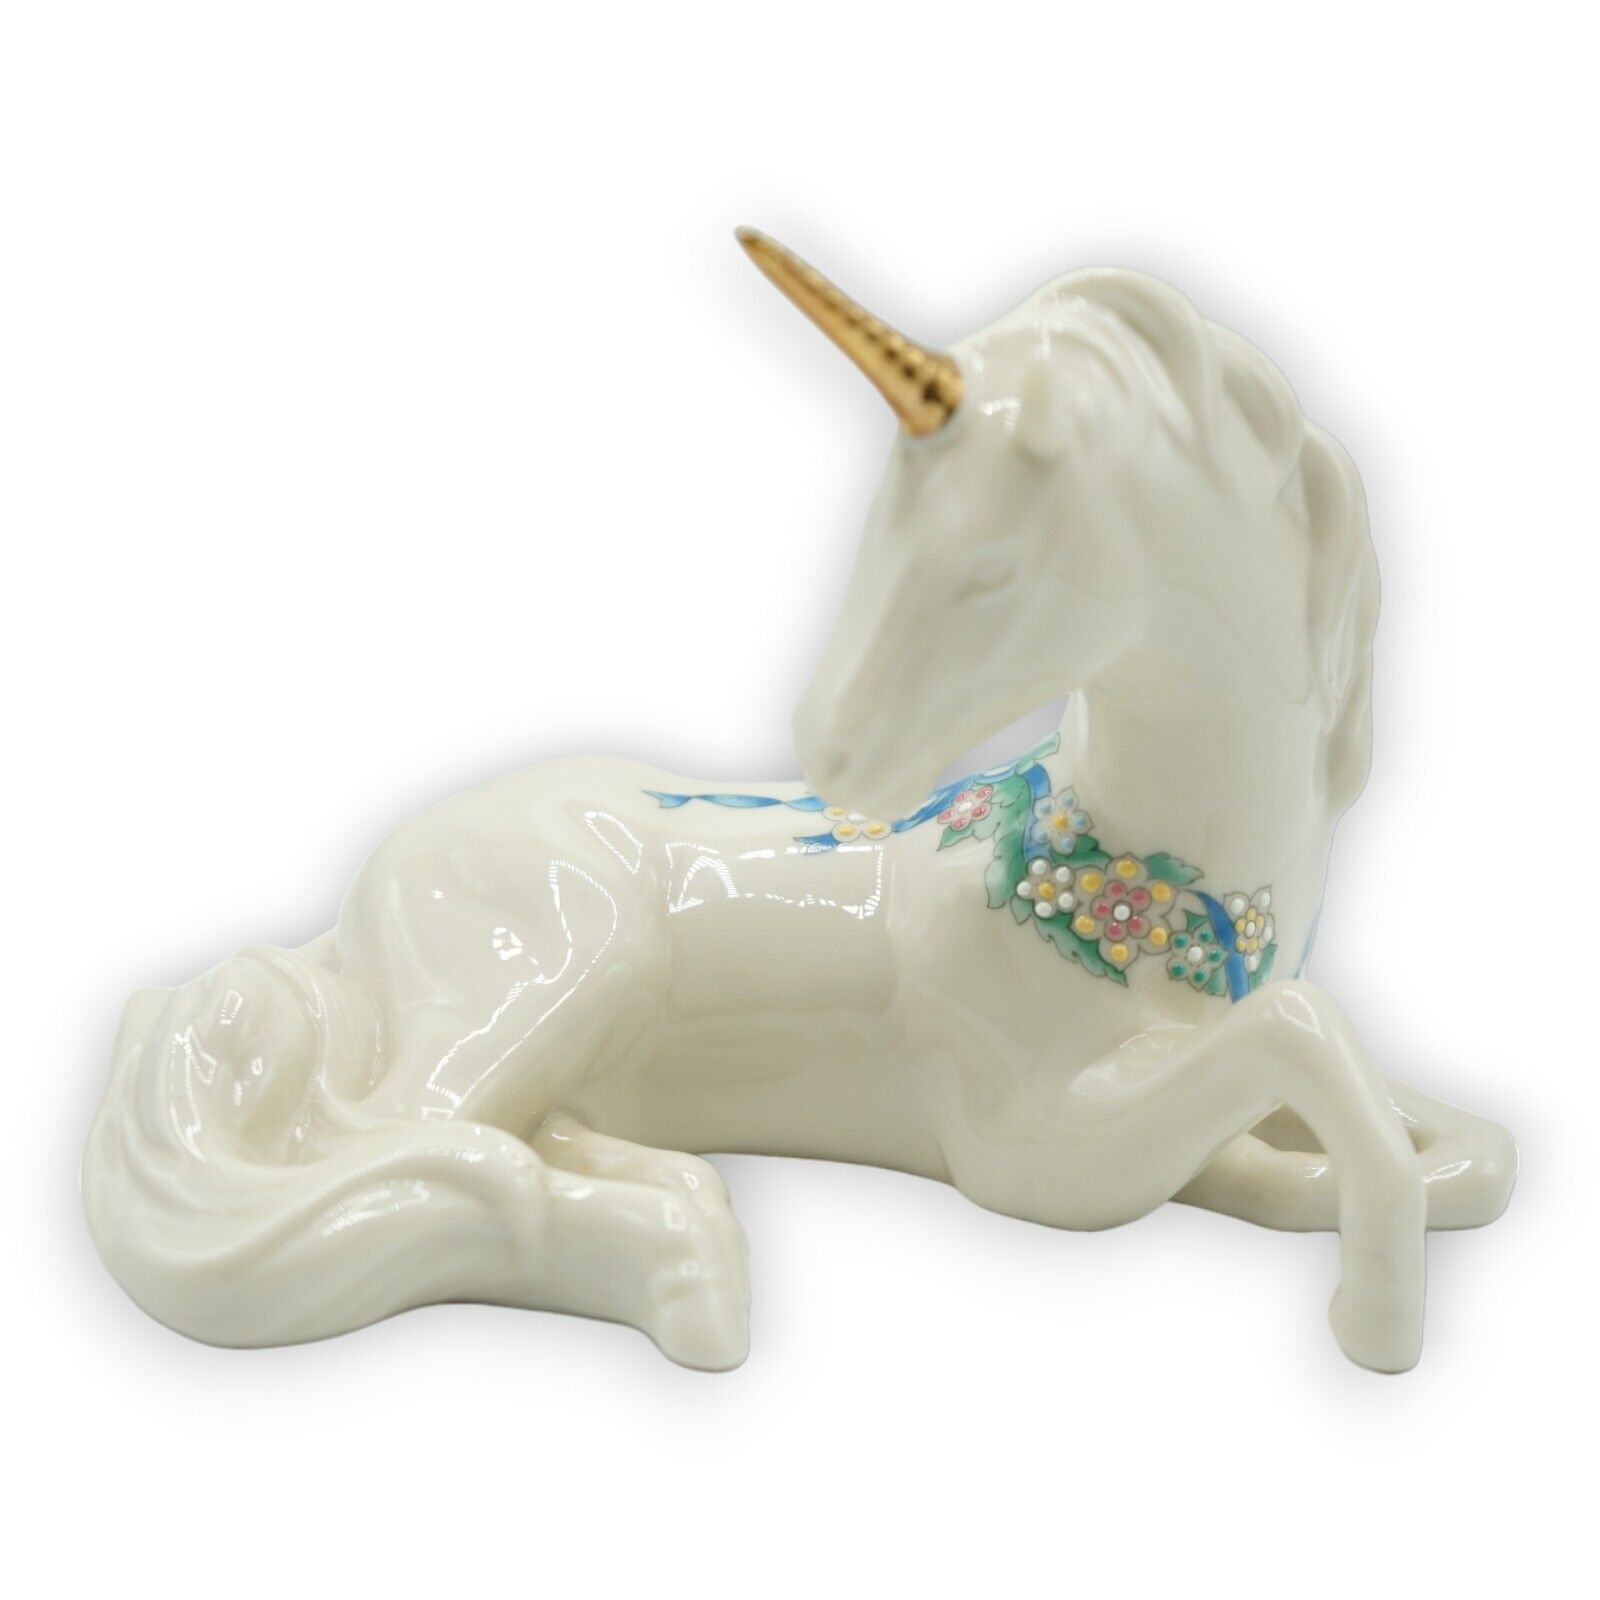 1993 Lenox China Jewels Collection Porcelain Hand Painted Unicorn Figurine - EUC